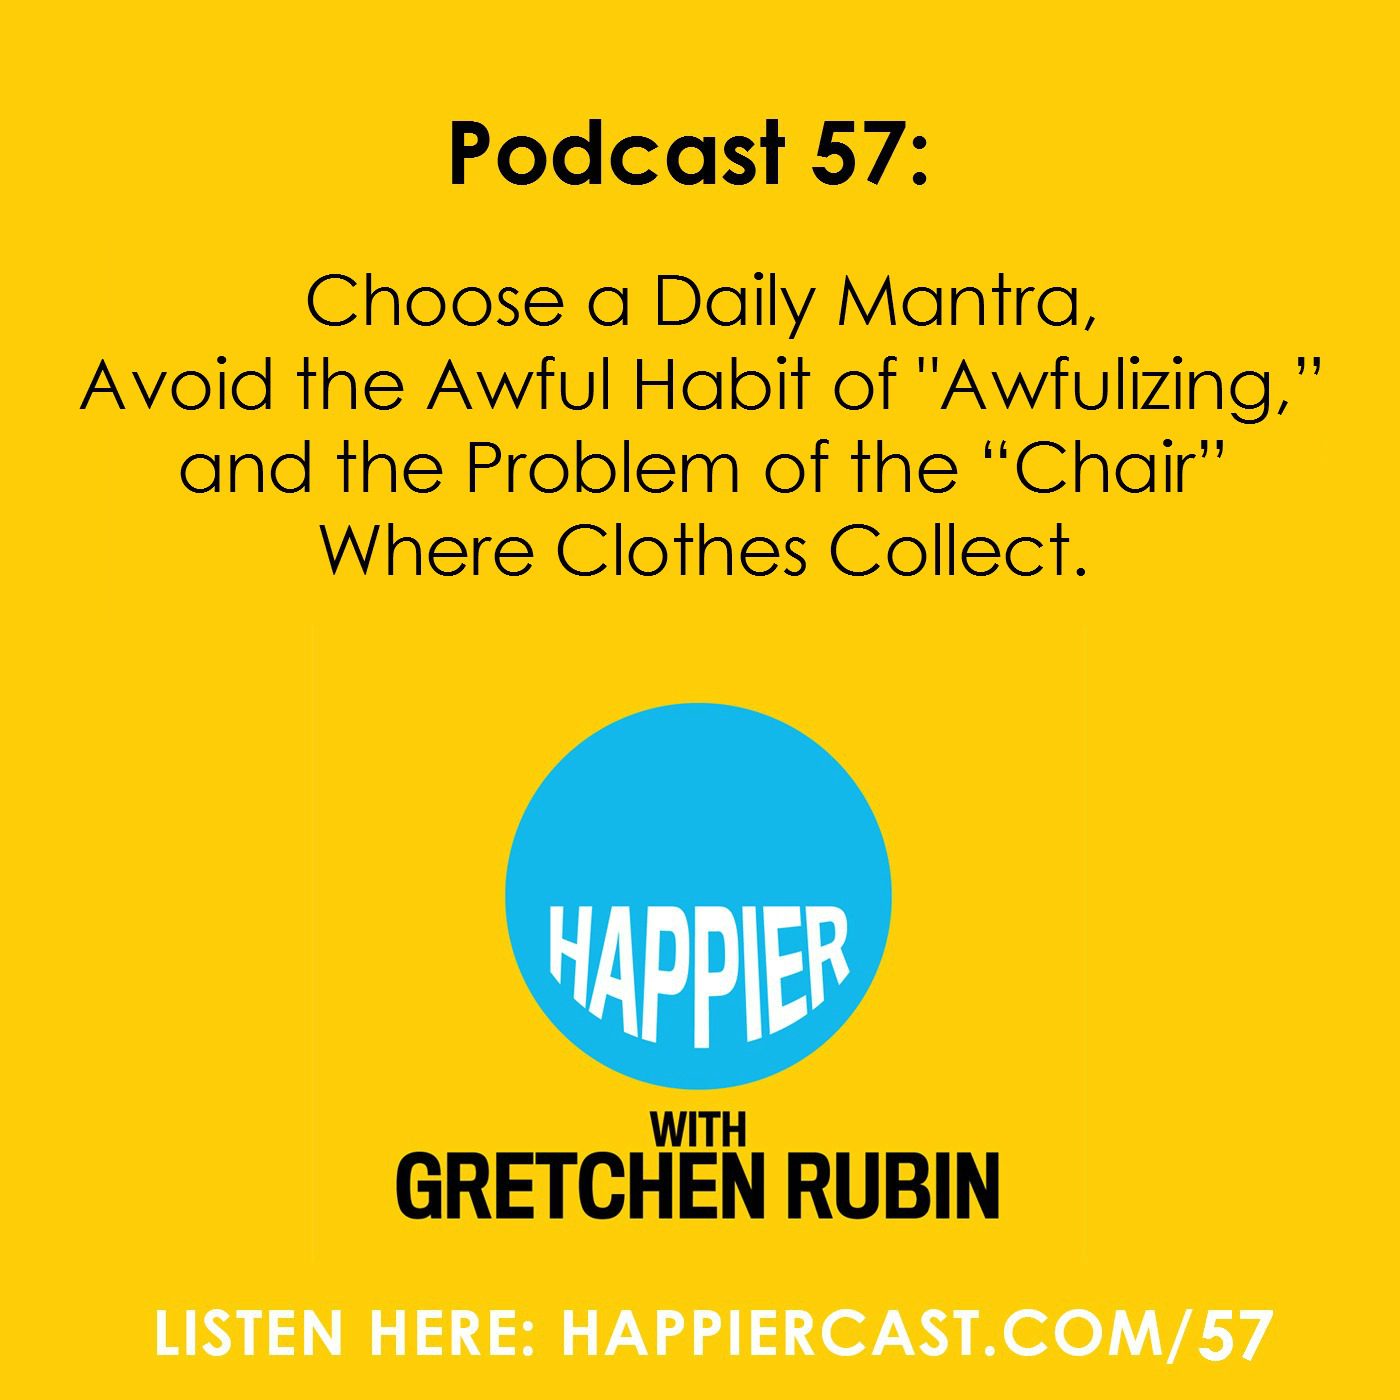 Happier with Gretchen Rubin - Podcast #57